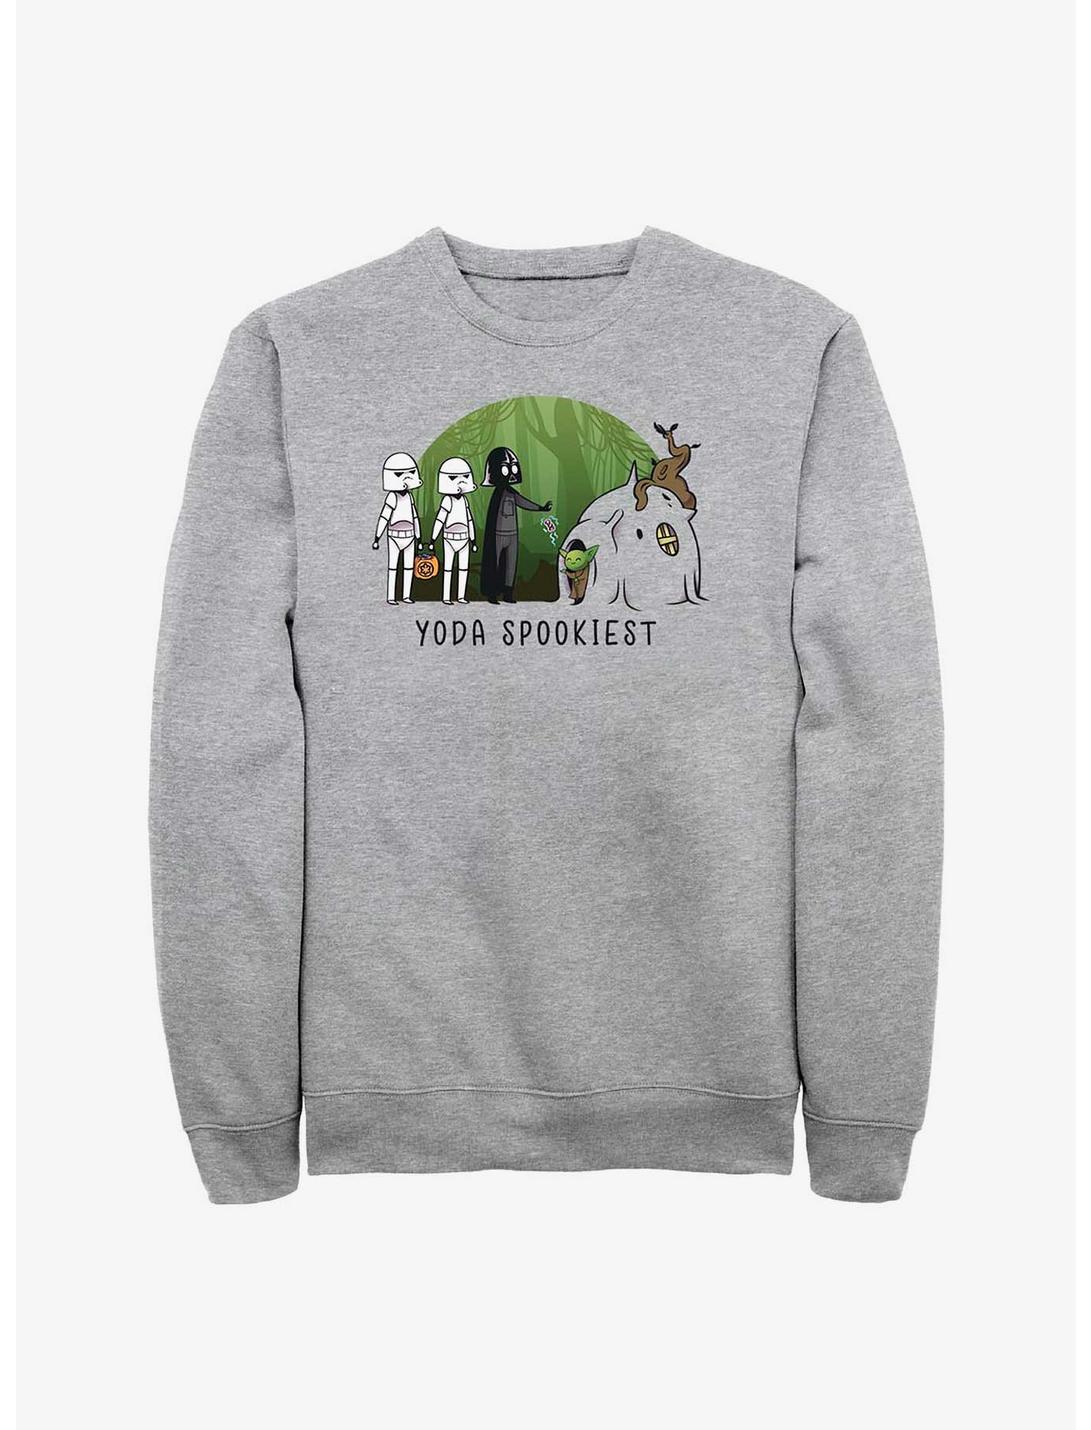 Plus Size Star Wars Yoda Spookiest Sweatshirt, ATH HTR, hi-res